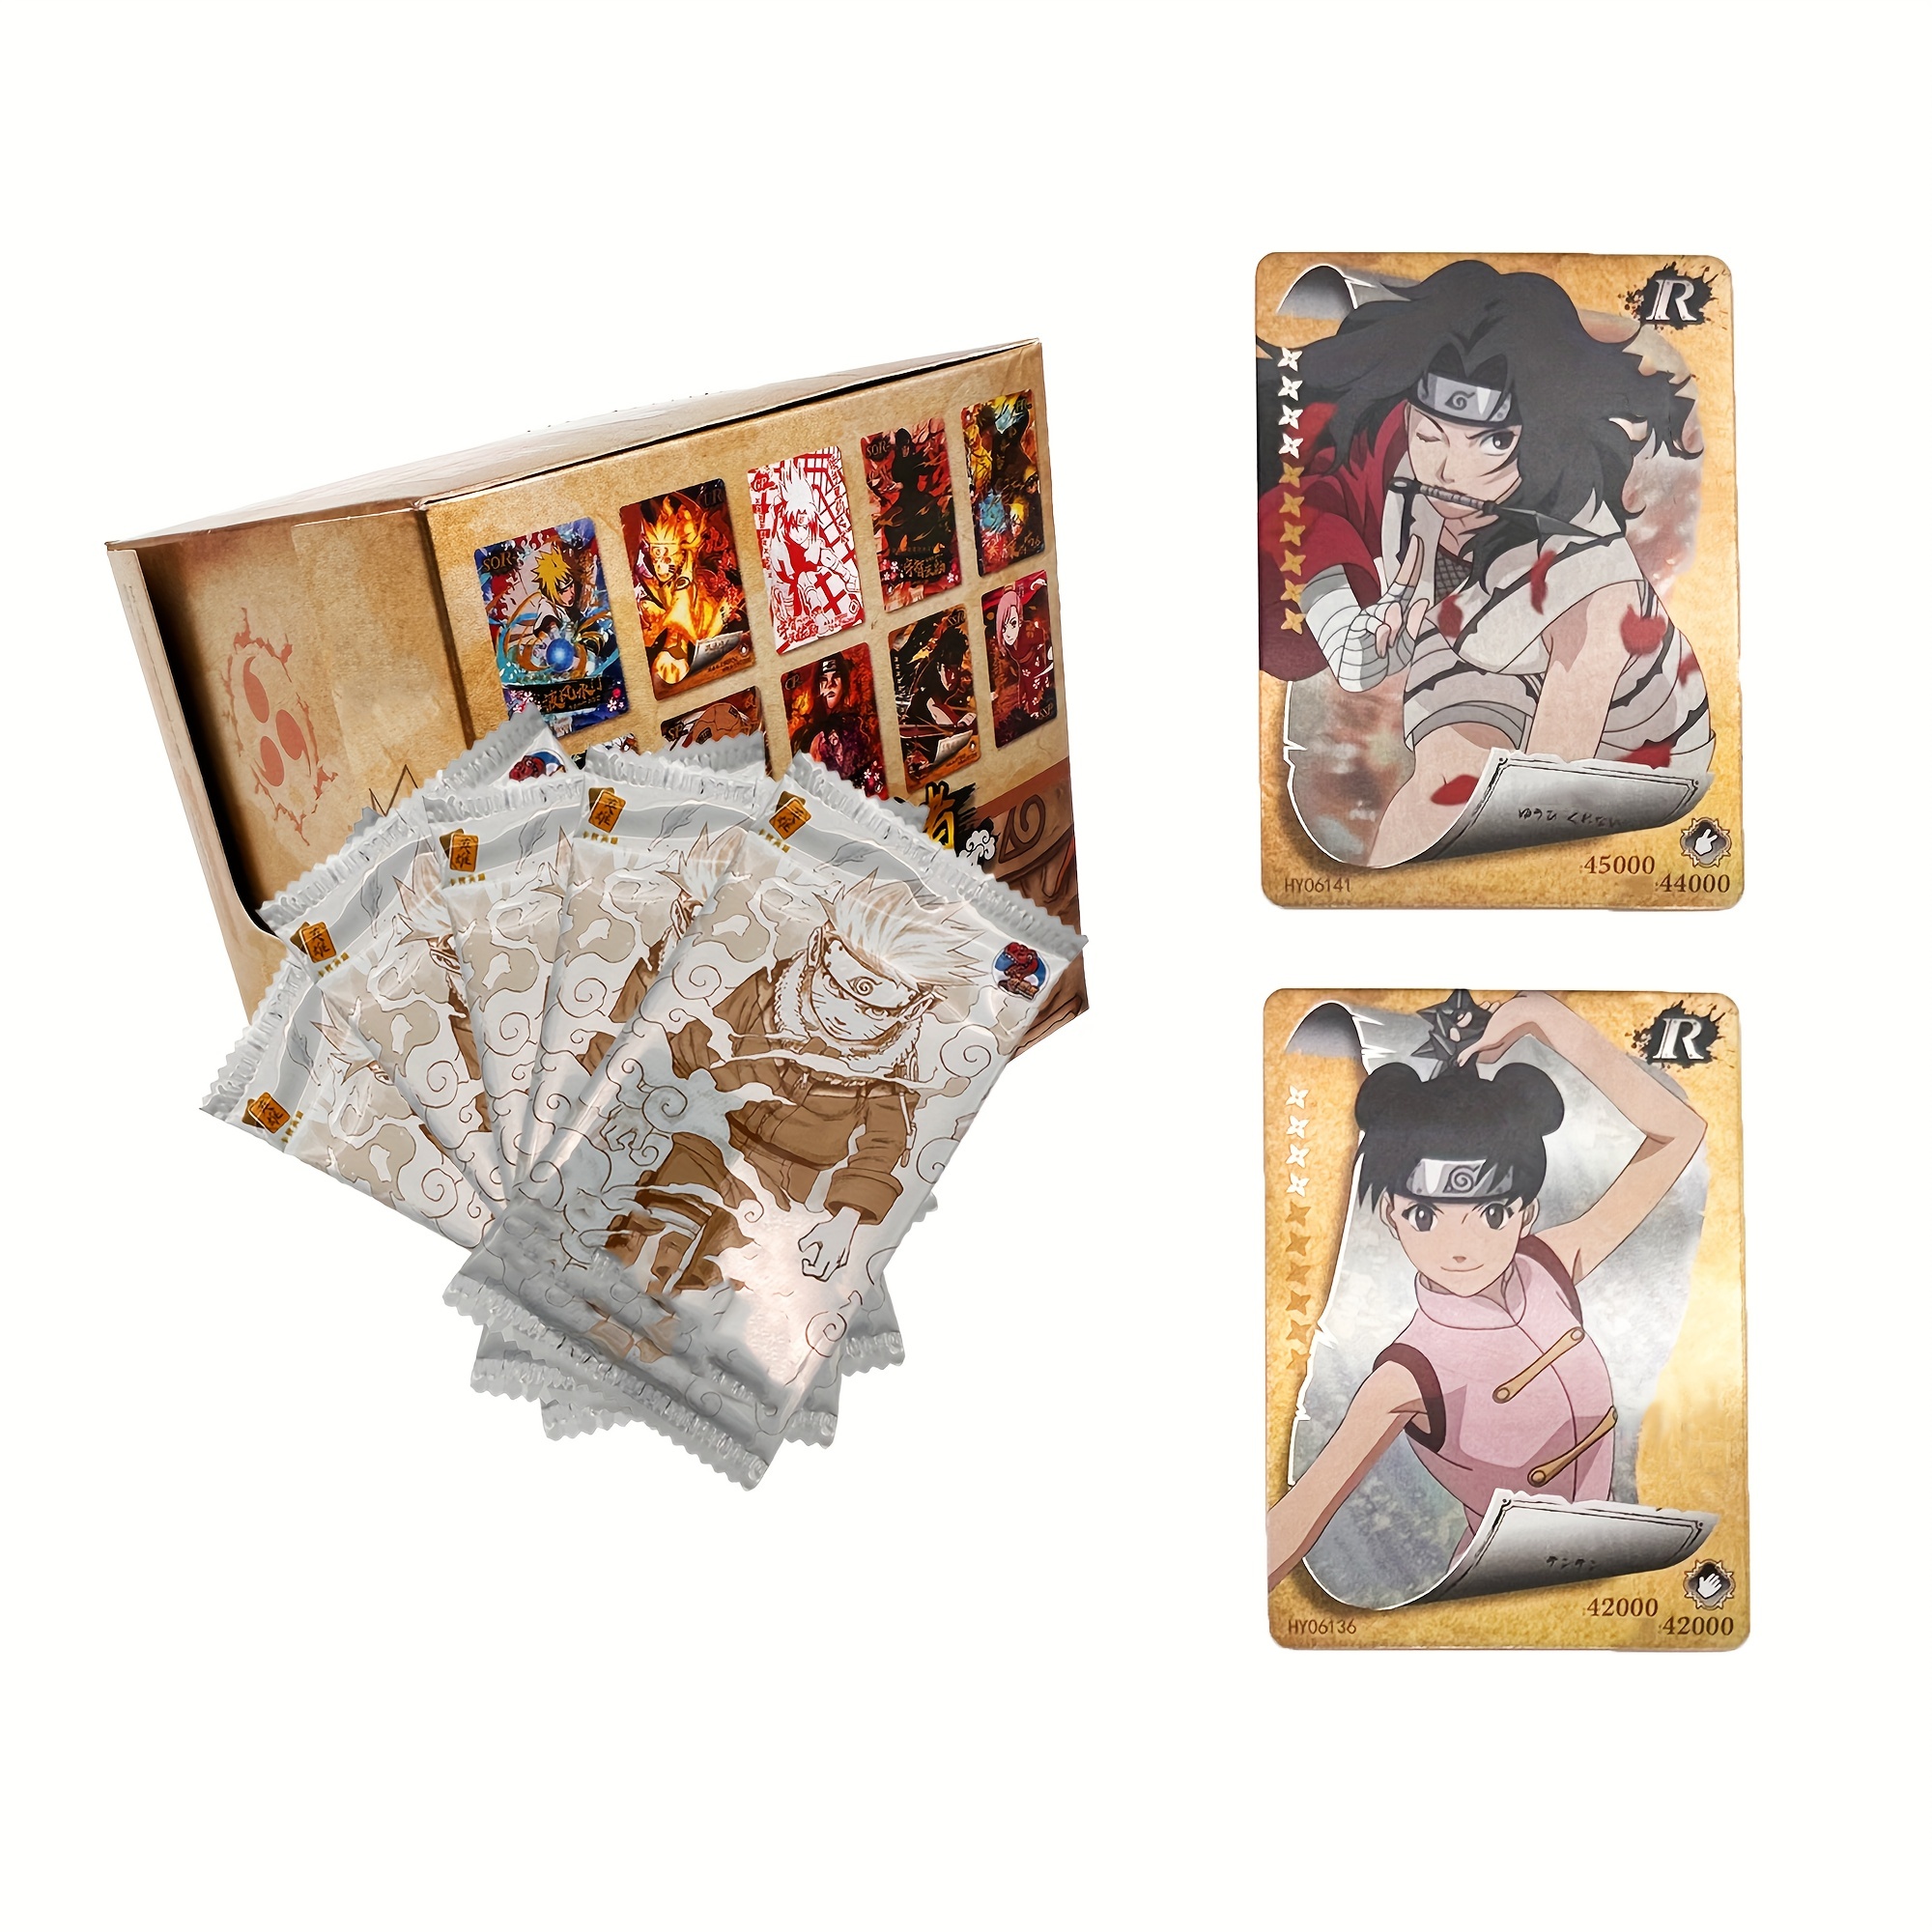 60Pcs Vmax cards V GX EX English version anime collection Trading